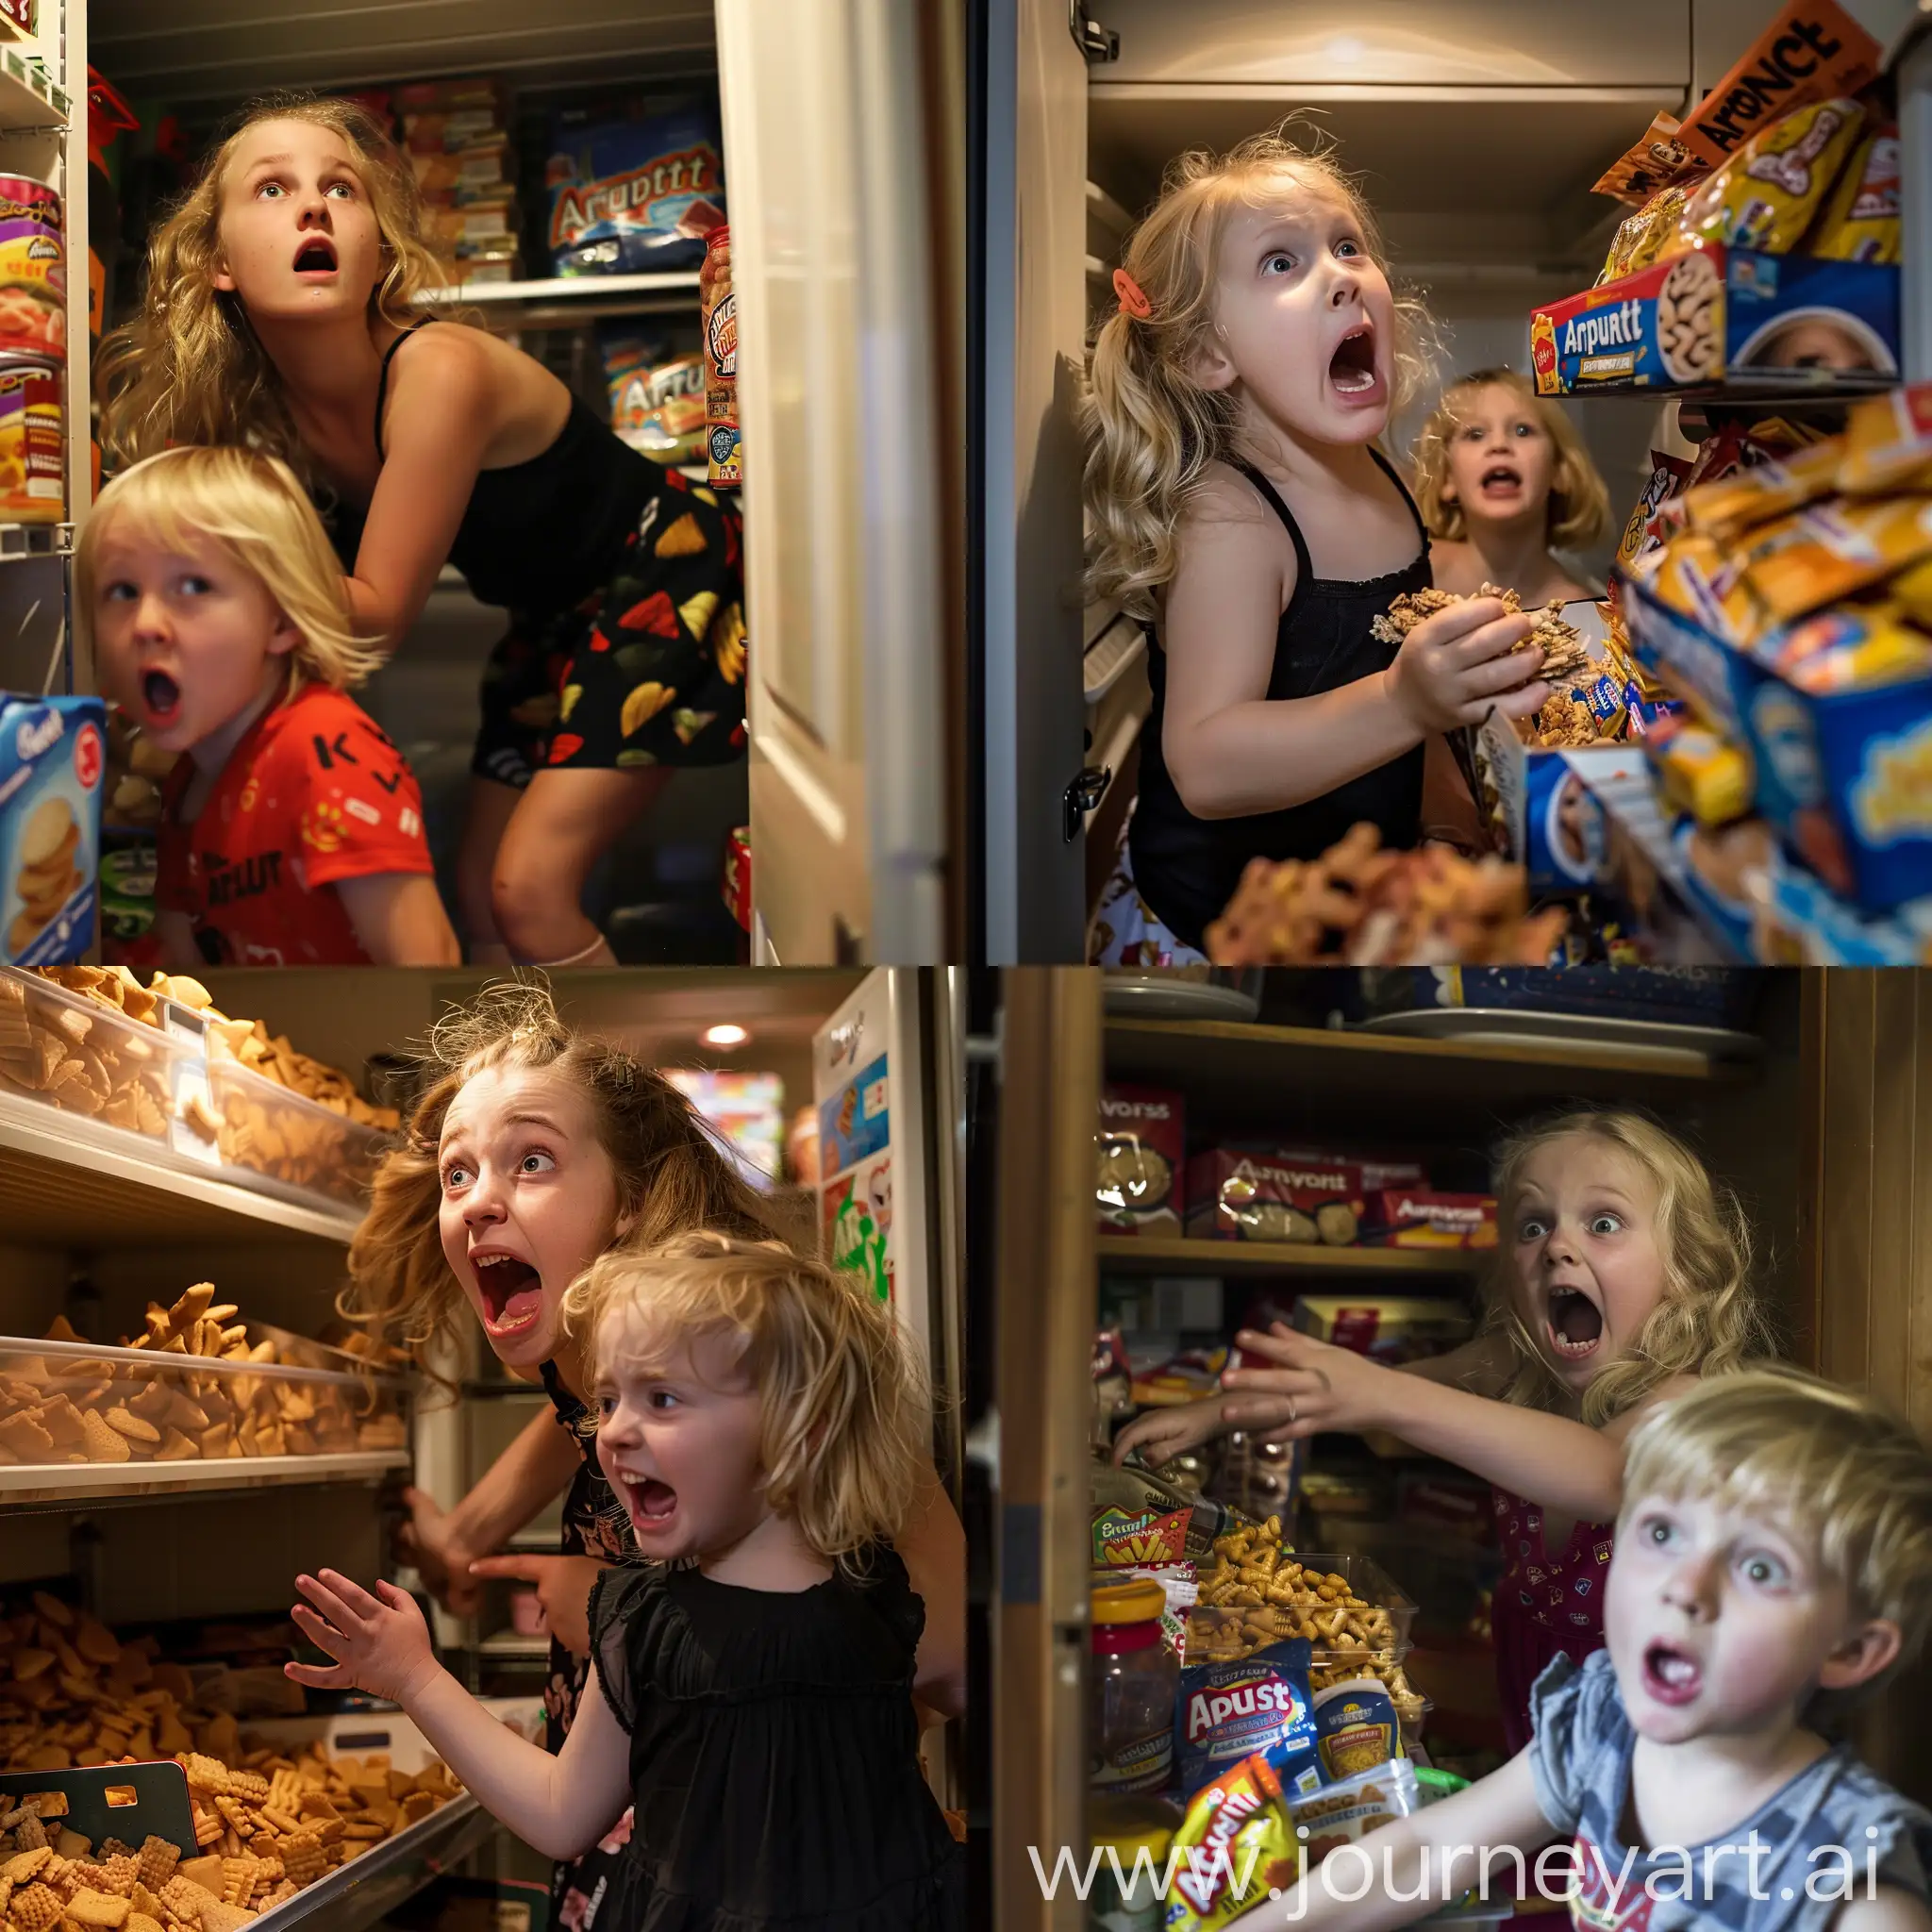 Big girl raids Australian Arnotts Shapes out of pantry while skinny blonde kid screams